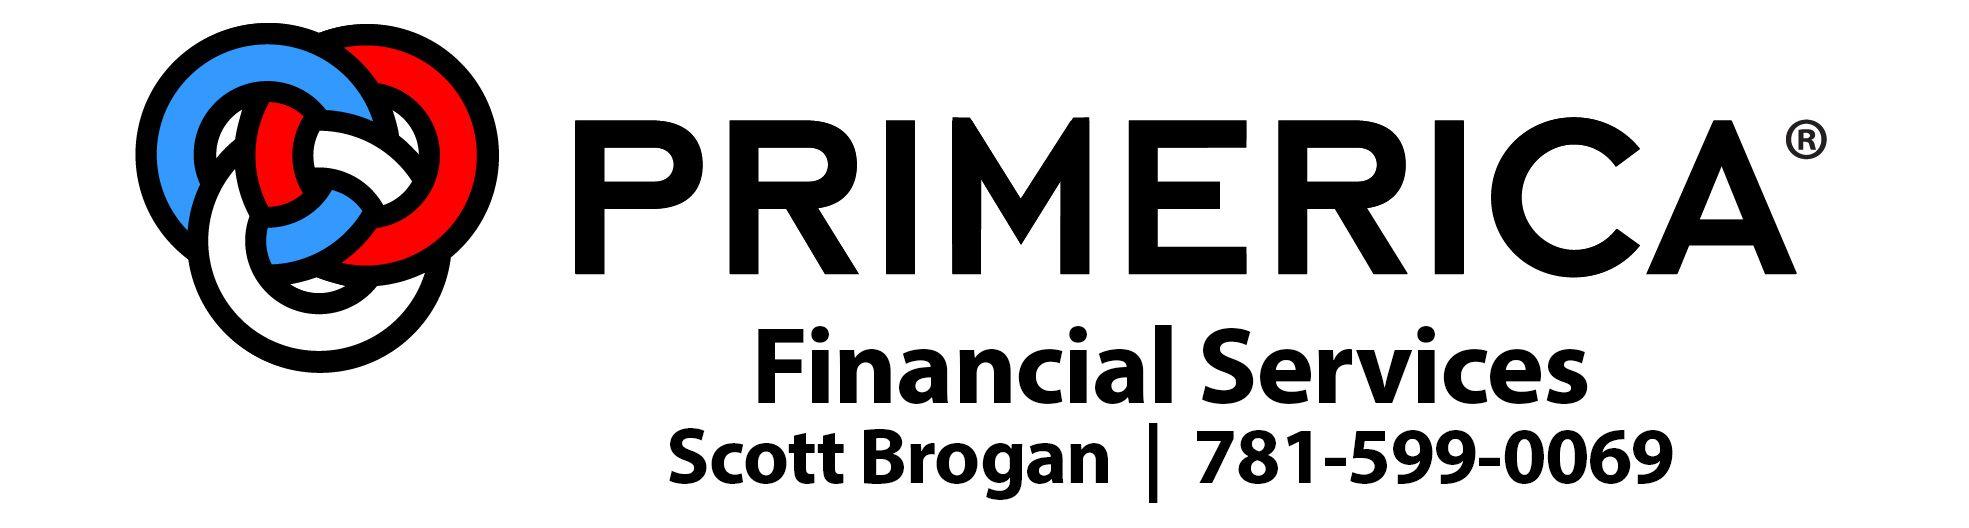 Prime America Logo - Primerica logo - Lynn Area Chamber